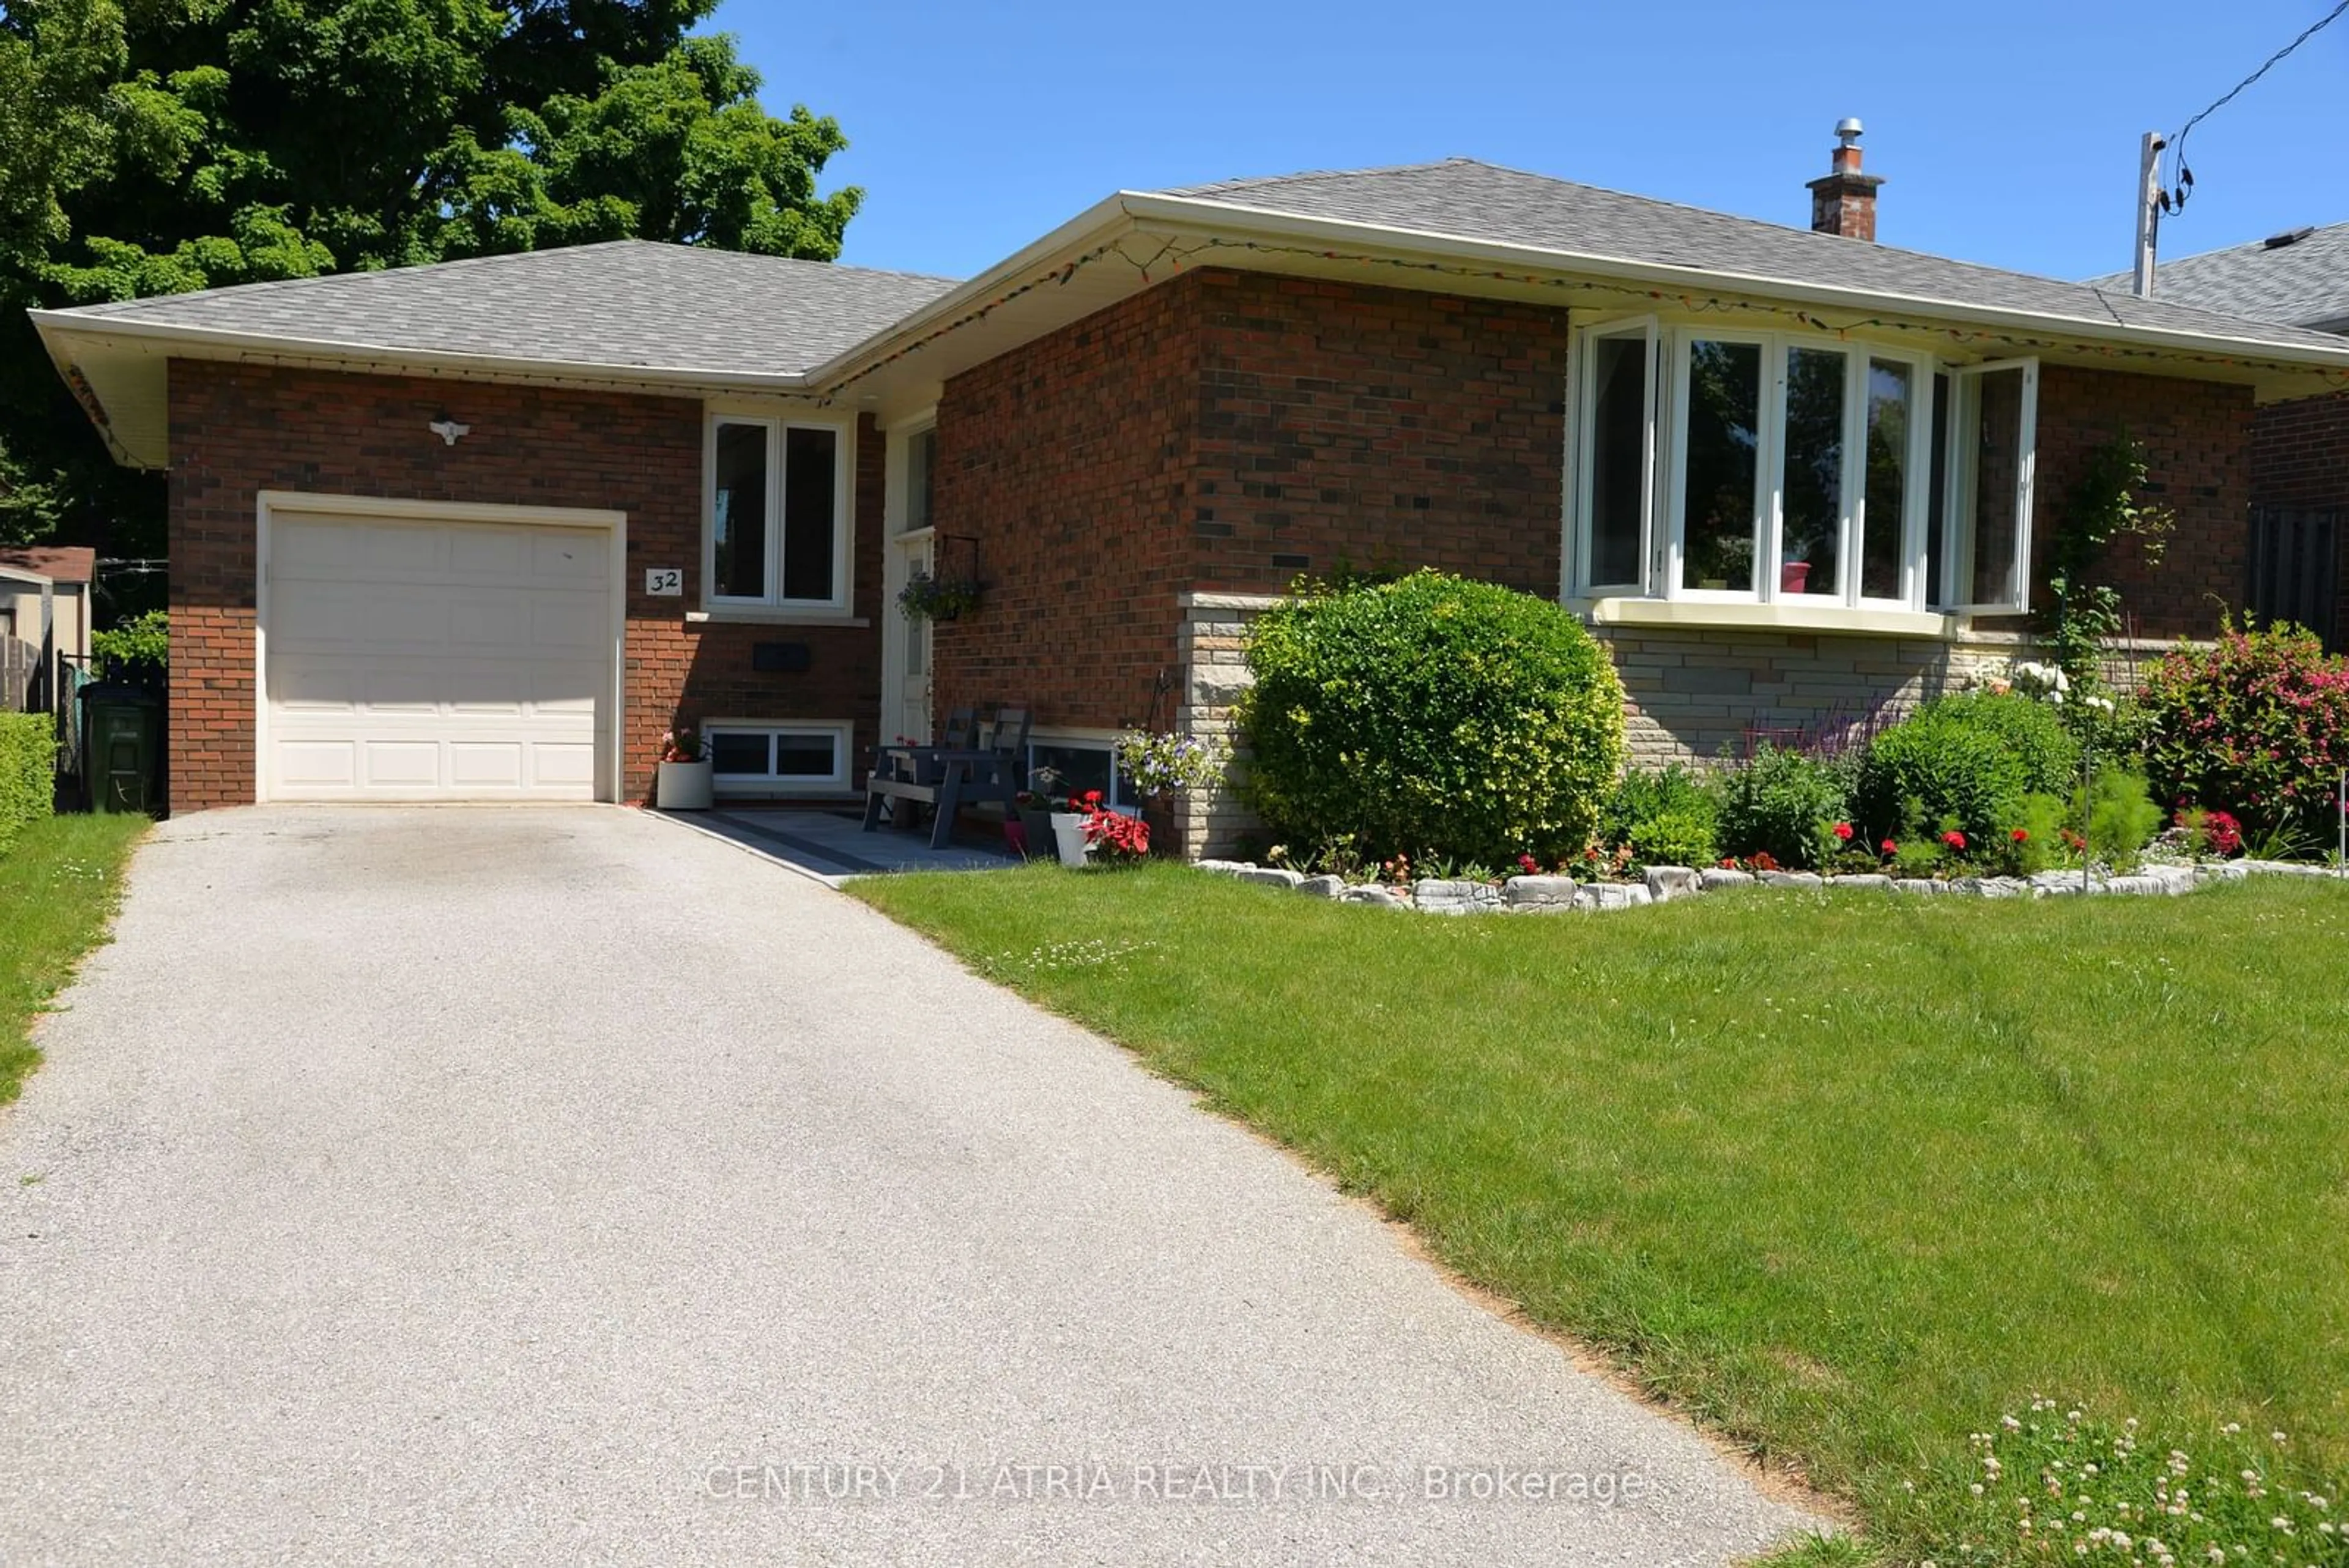 Frontside or backside of a home for 32 Hoshlega Dr, Toronto Ontario M1G 2X5